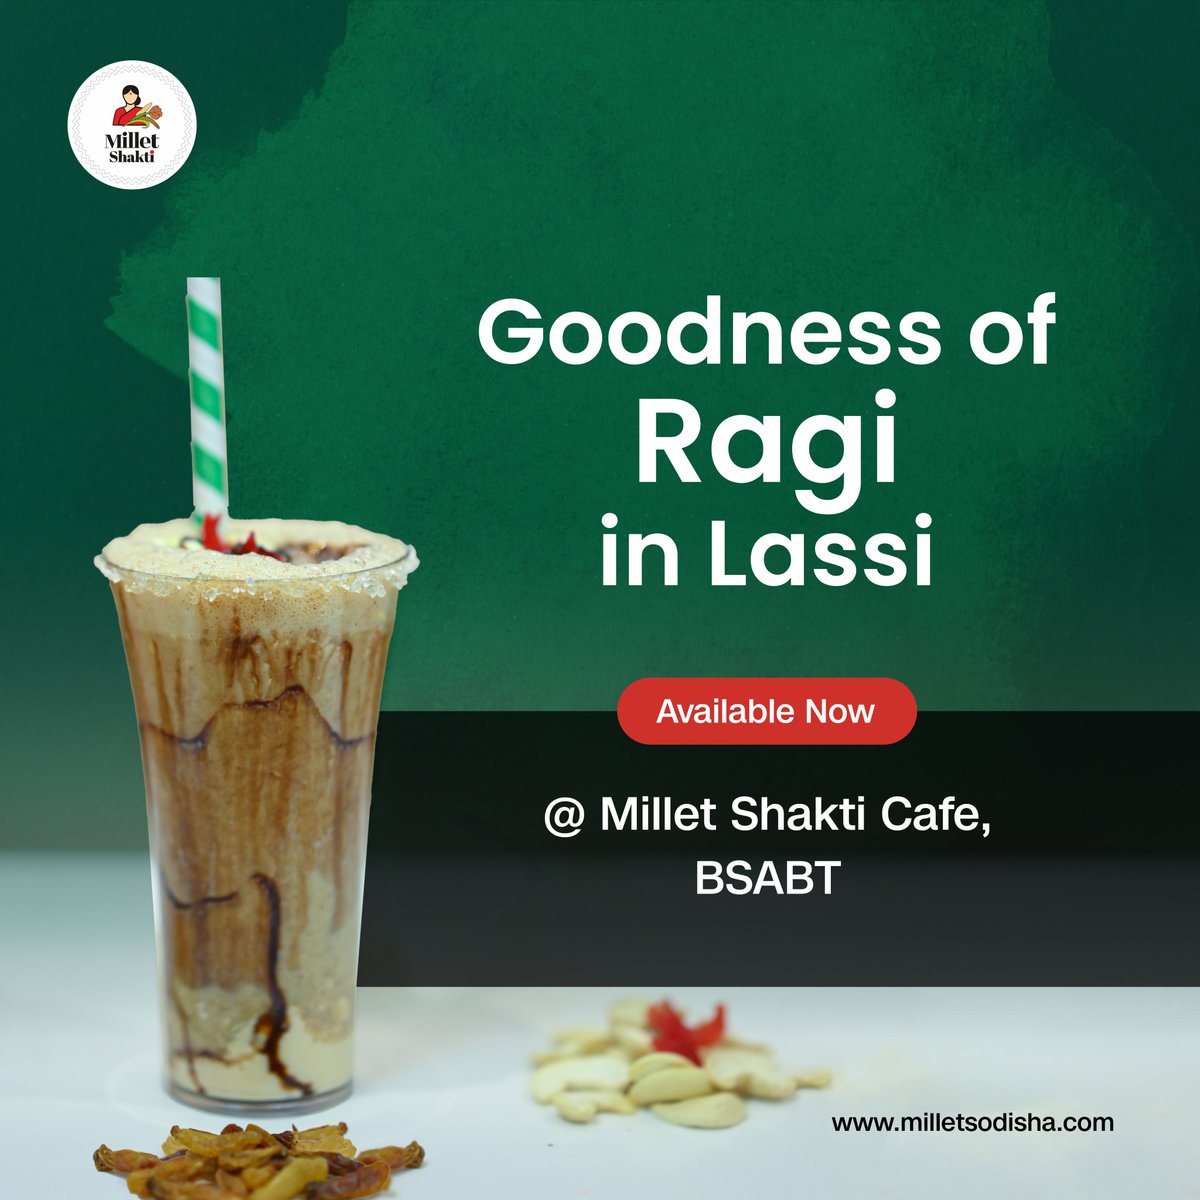 Stay cool this summer with refreshing 'Mandia Chaas' and 'Ragi Lassi'! Visit Millet Shakti Cafe at Babasaheb Bhimrao Ambedkar Bus Terminal (BSABT), Bhubaneswar, and enjoy these healthy, cooling drinks. #SummerRefreshments #MilletShaktiCafe #HealthyDrinks #Bhubaneswar #BSABT